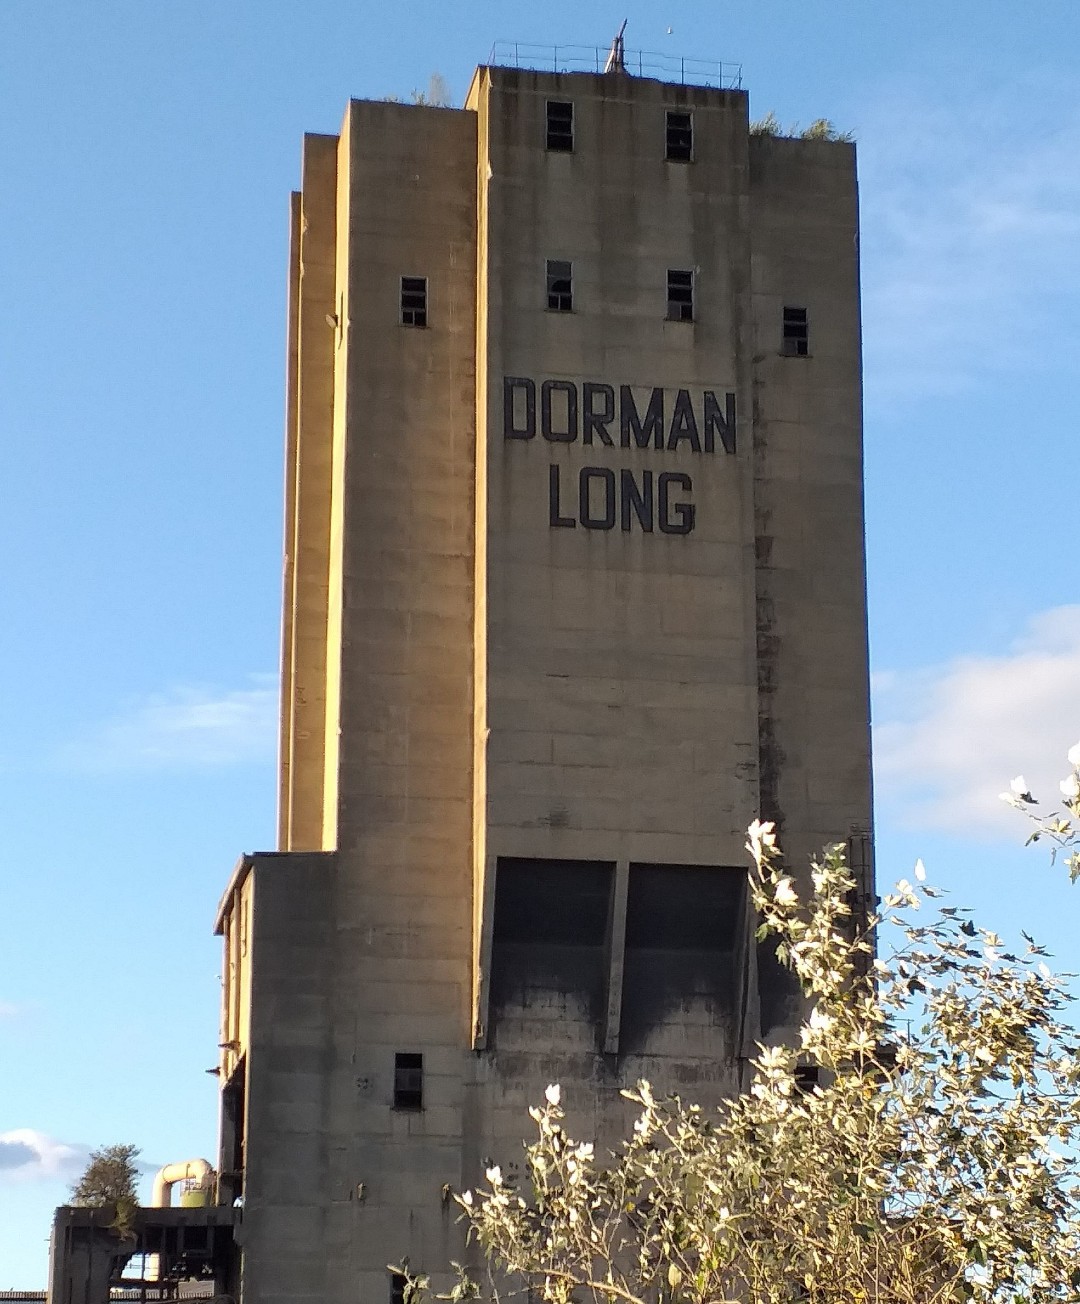 Dorman Long Tower, an industrial landmark on Teesside